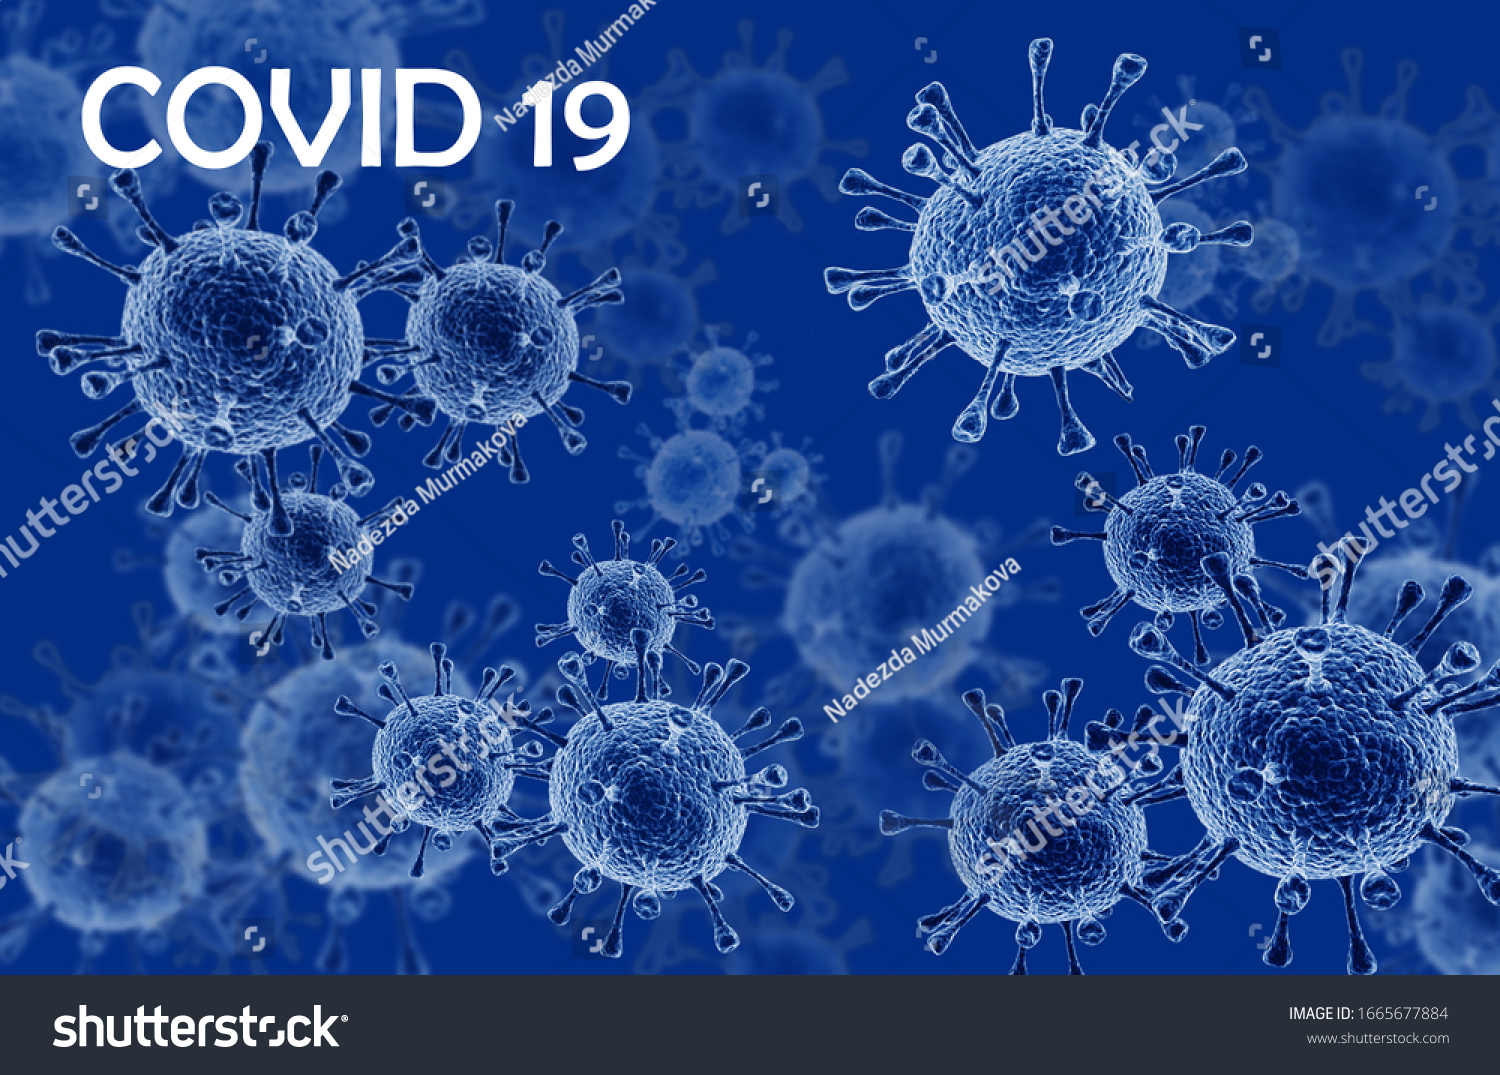 Coronavirus disease COVID-19 infection, medical illustration. New official name for Coronavirus disease named COVID-19, pandemic risk, blue background #1665677884